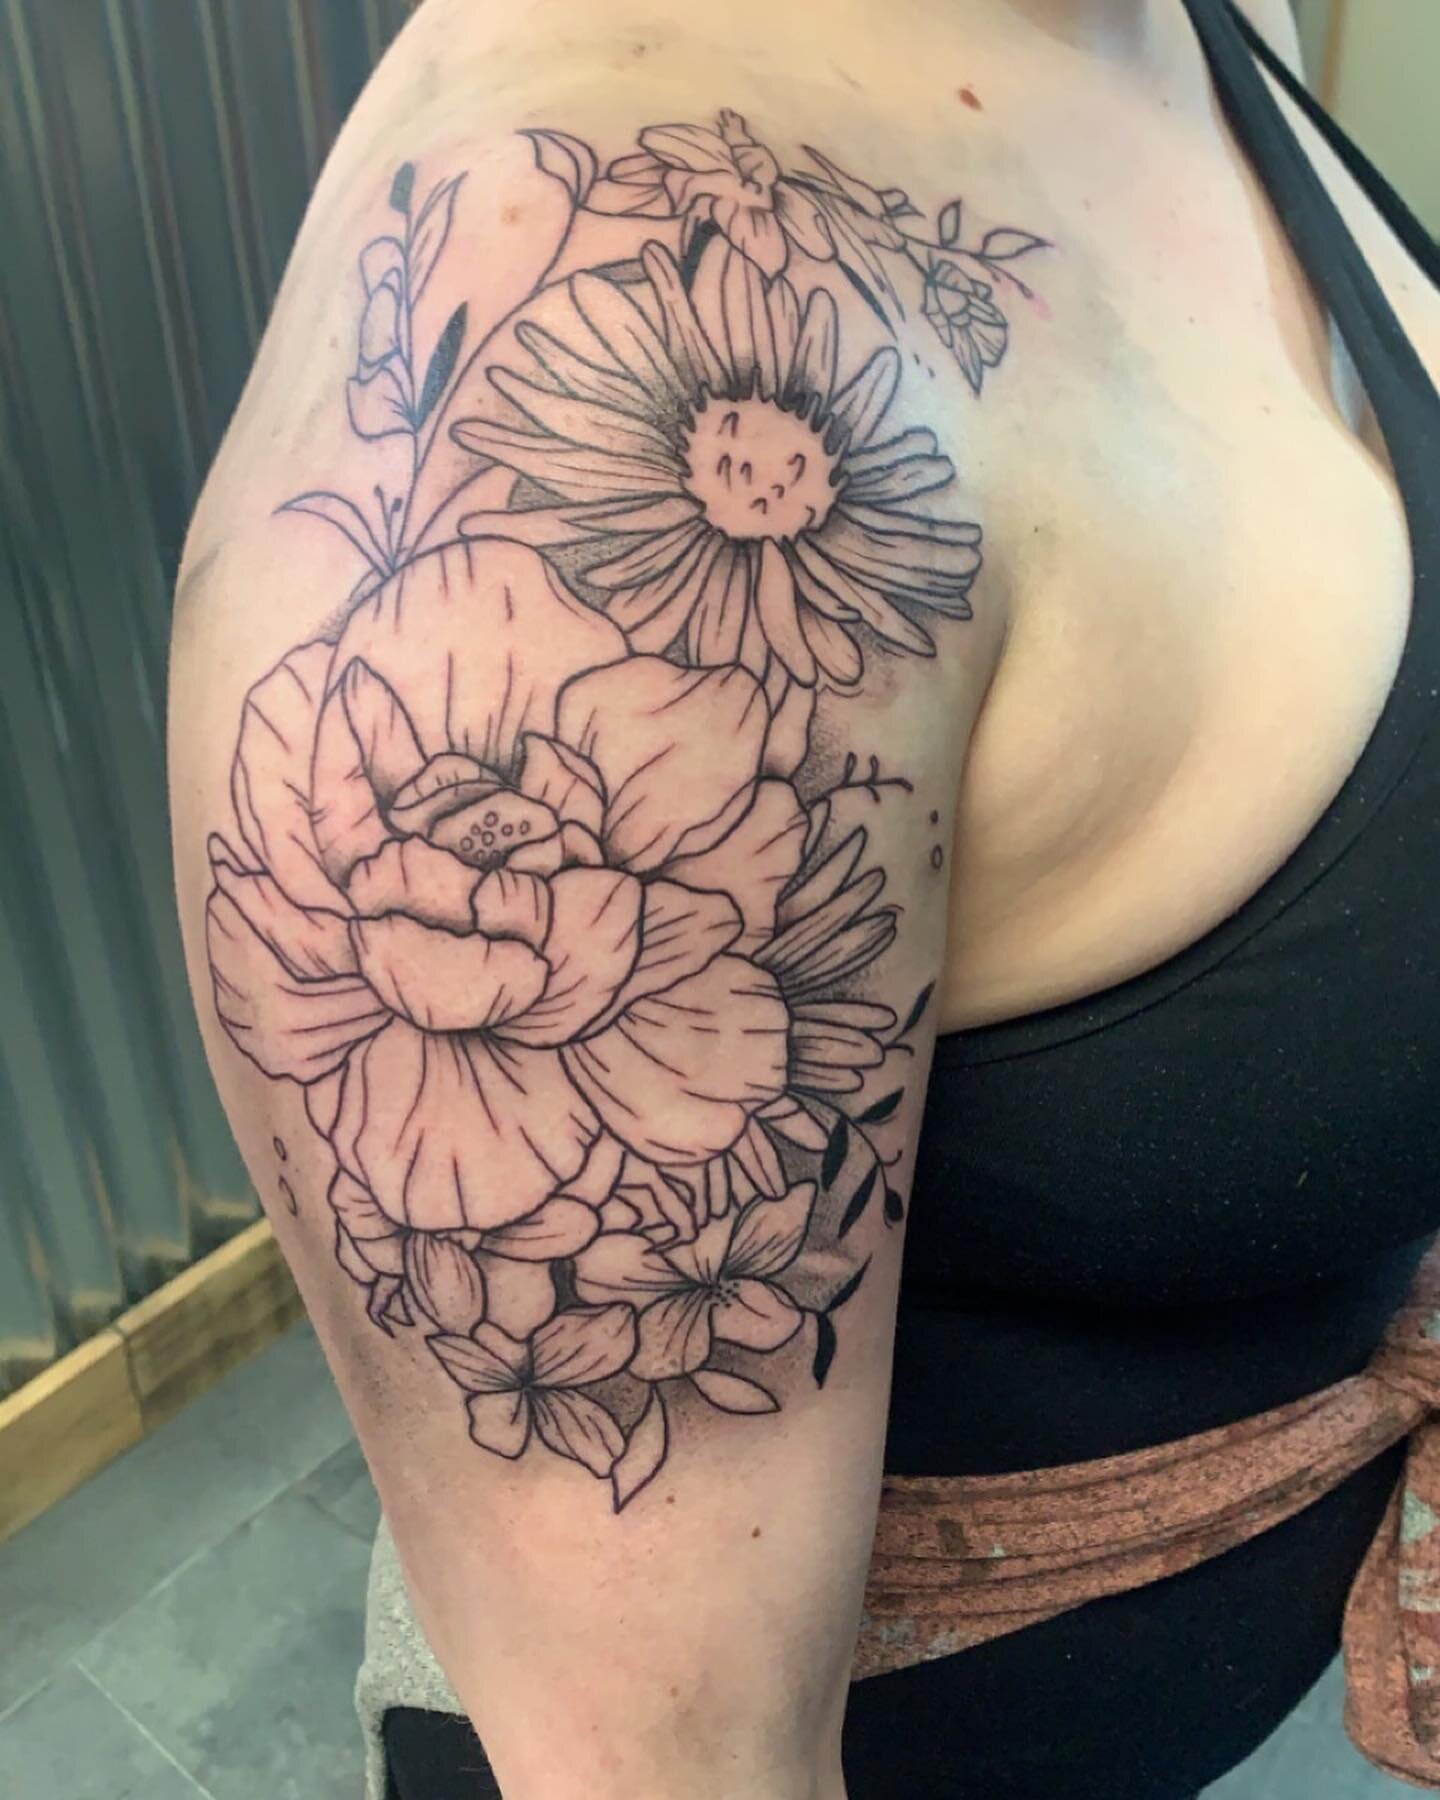 Floral line-work I did a couple months ago! 

#floraltattoo #linework #mntattooers #tattooartist #duluthmn